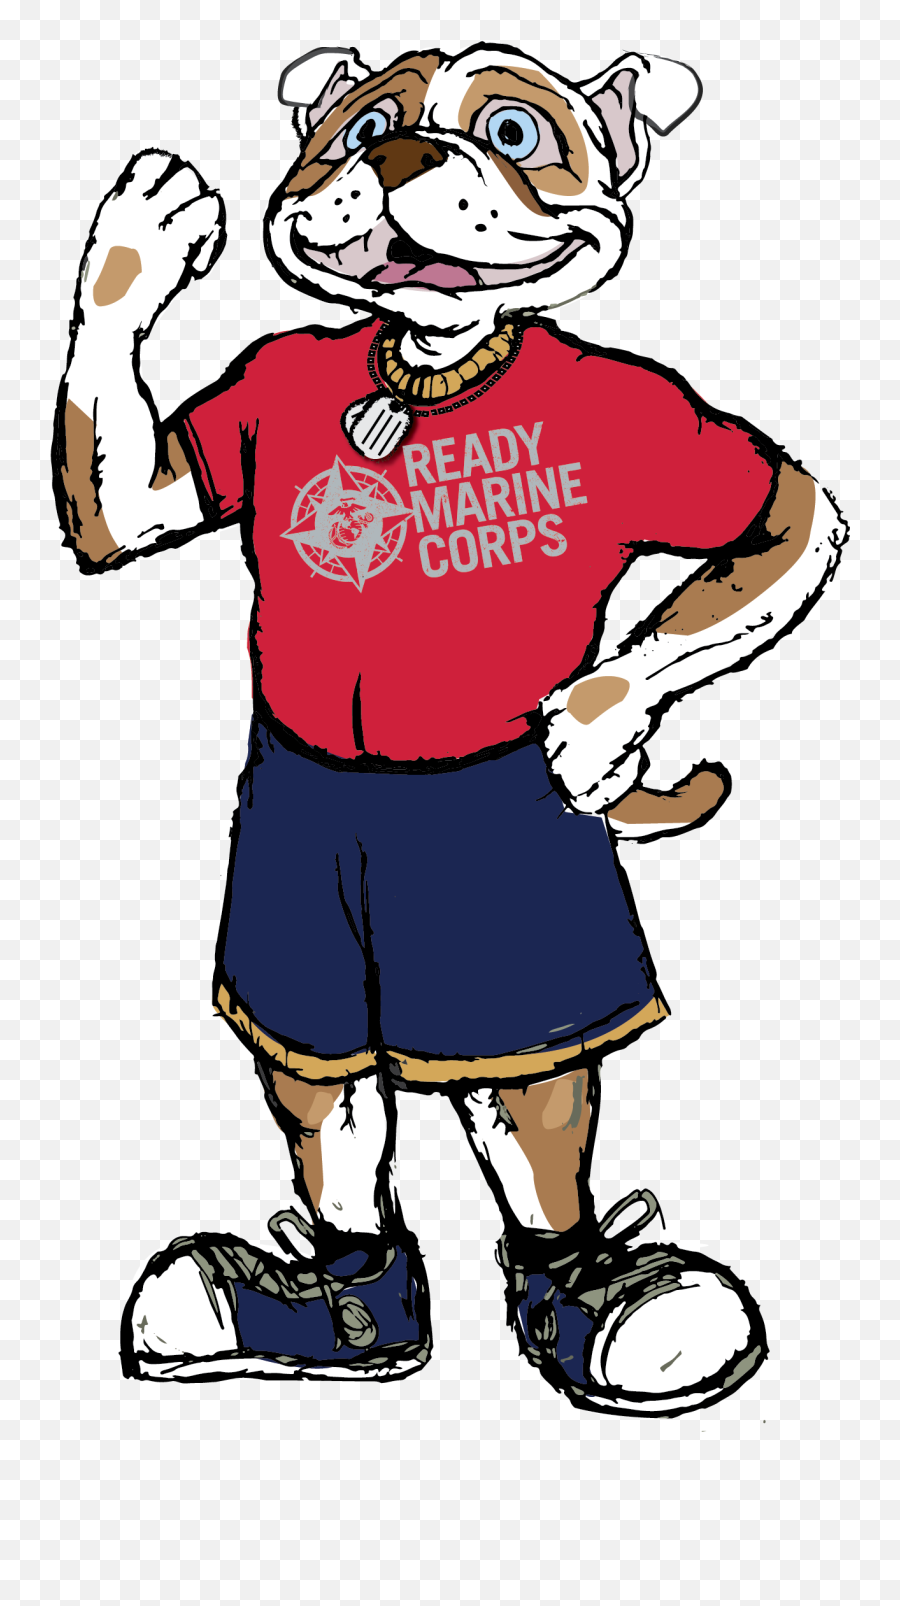 Ready Marine Corps Kids - Marine Corp Activities For Kids Png,Marine Corps Buddy Icon